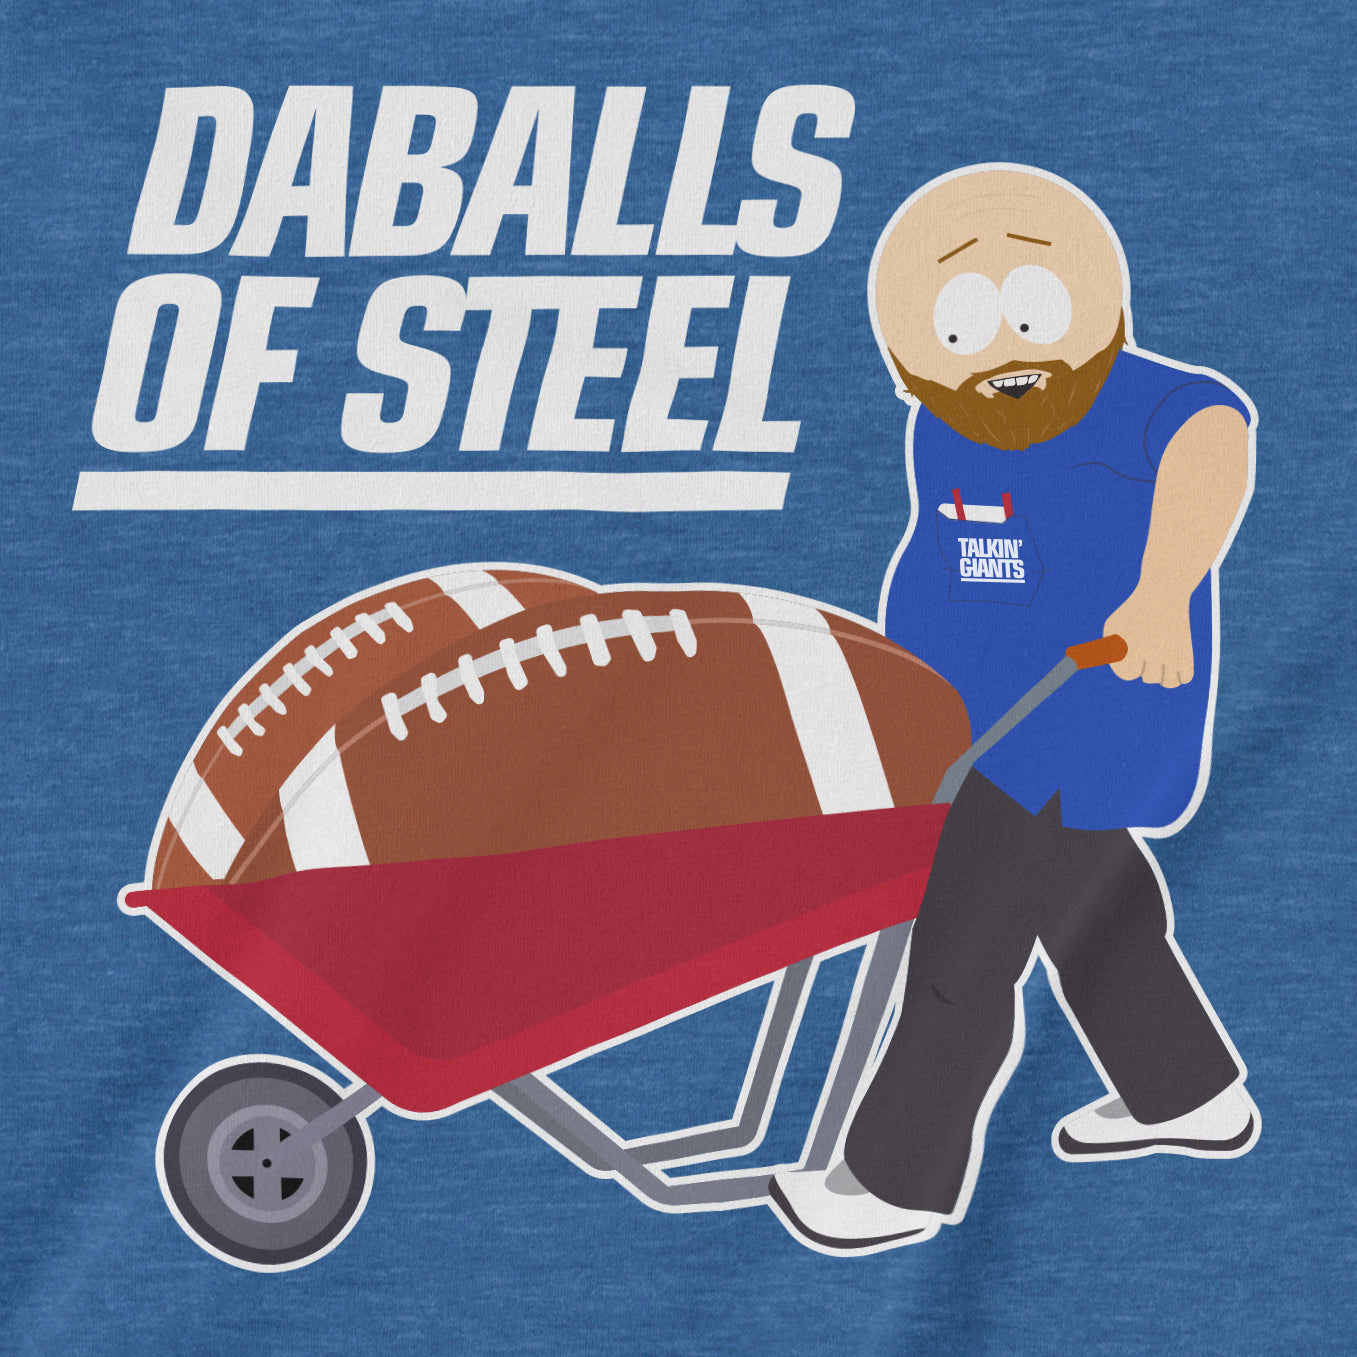 Daballs of Steel | T-Shirt